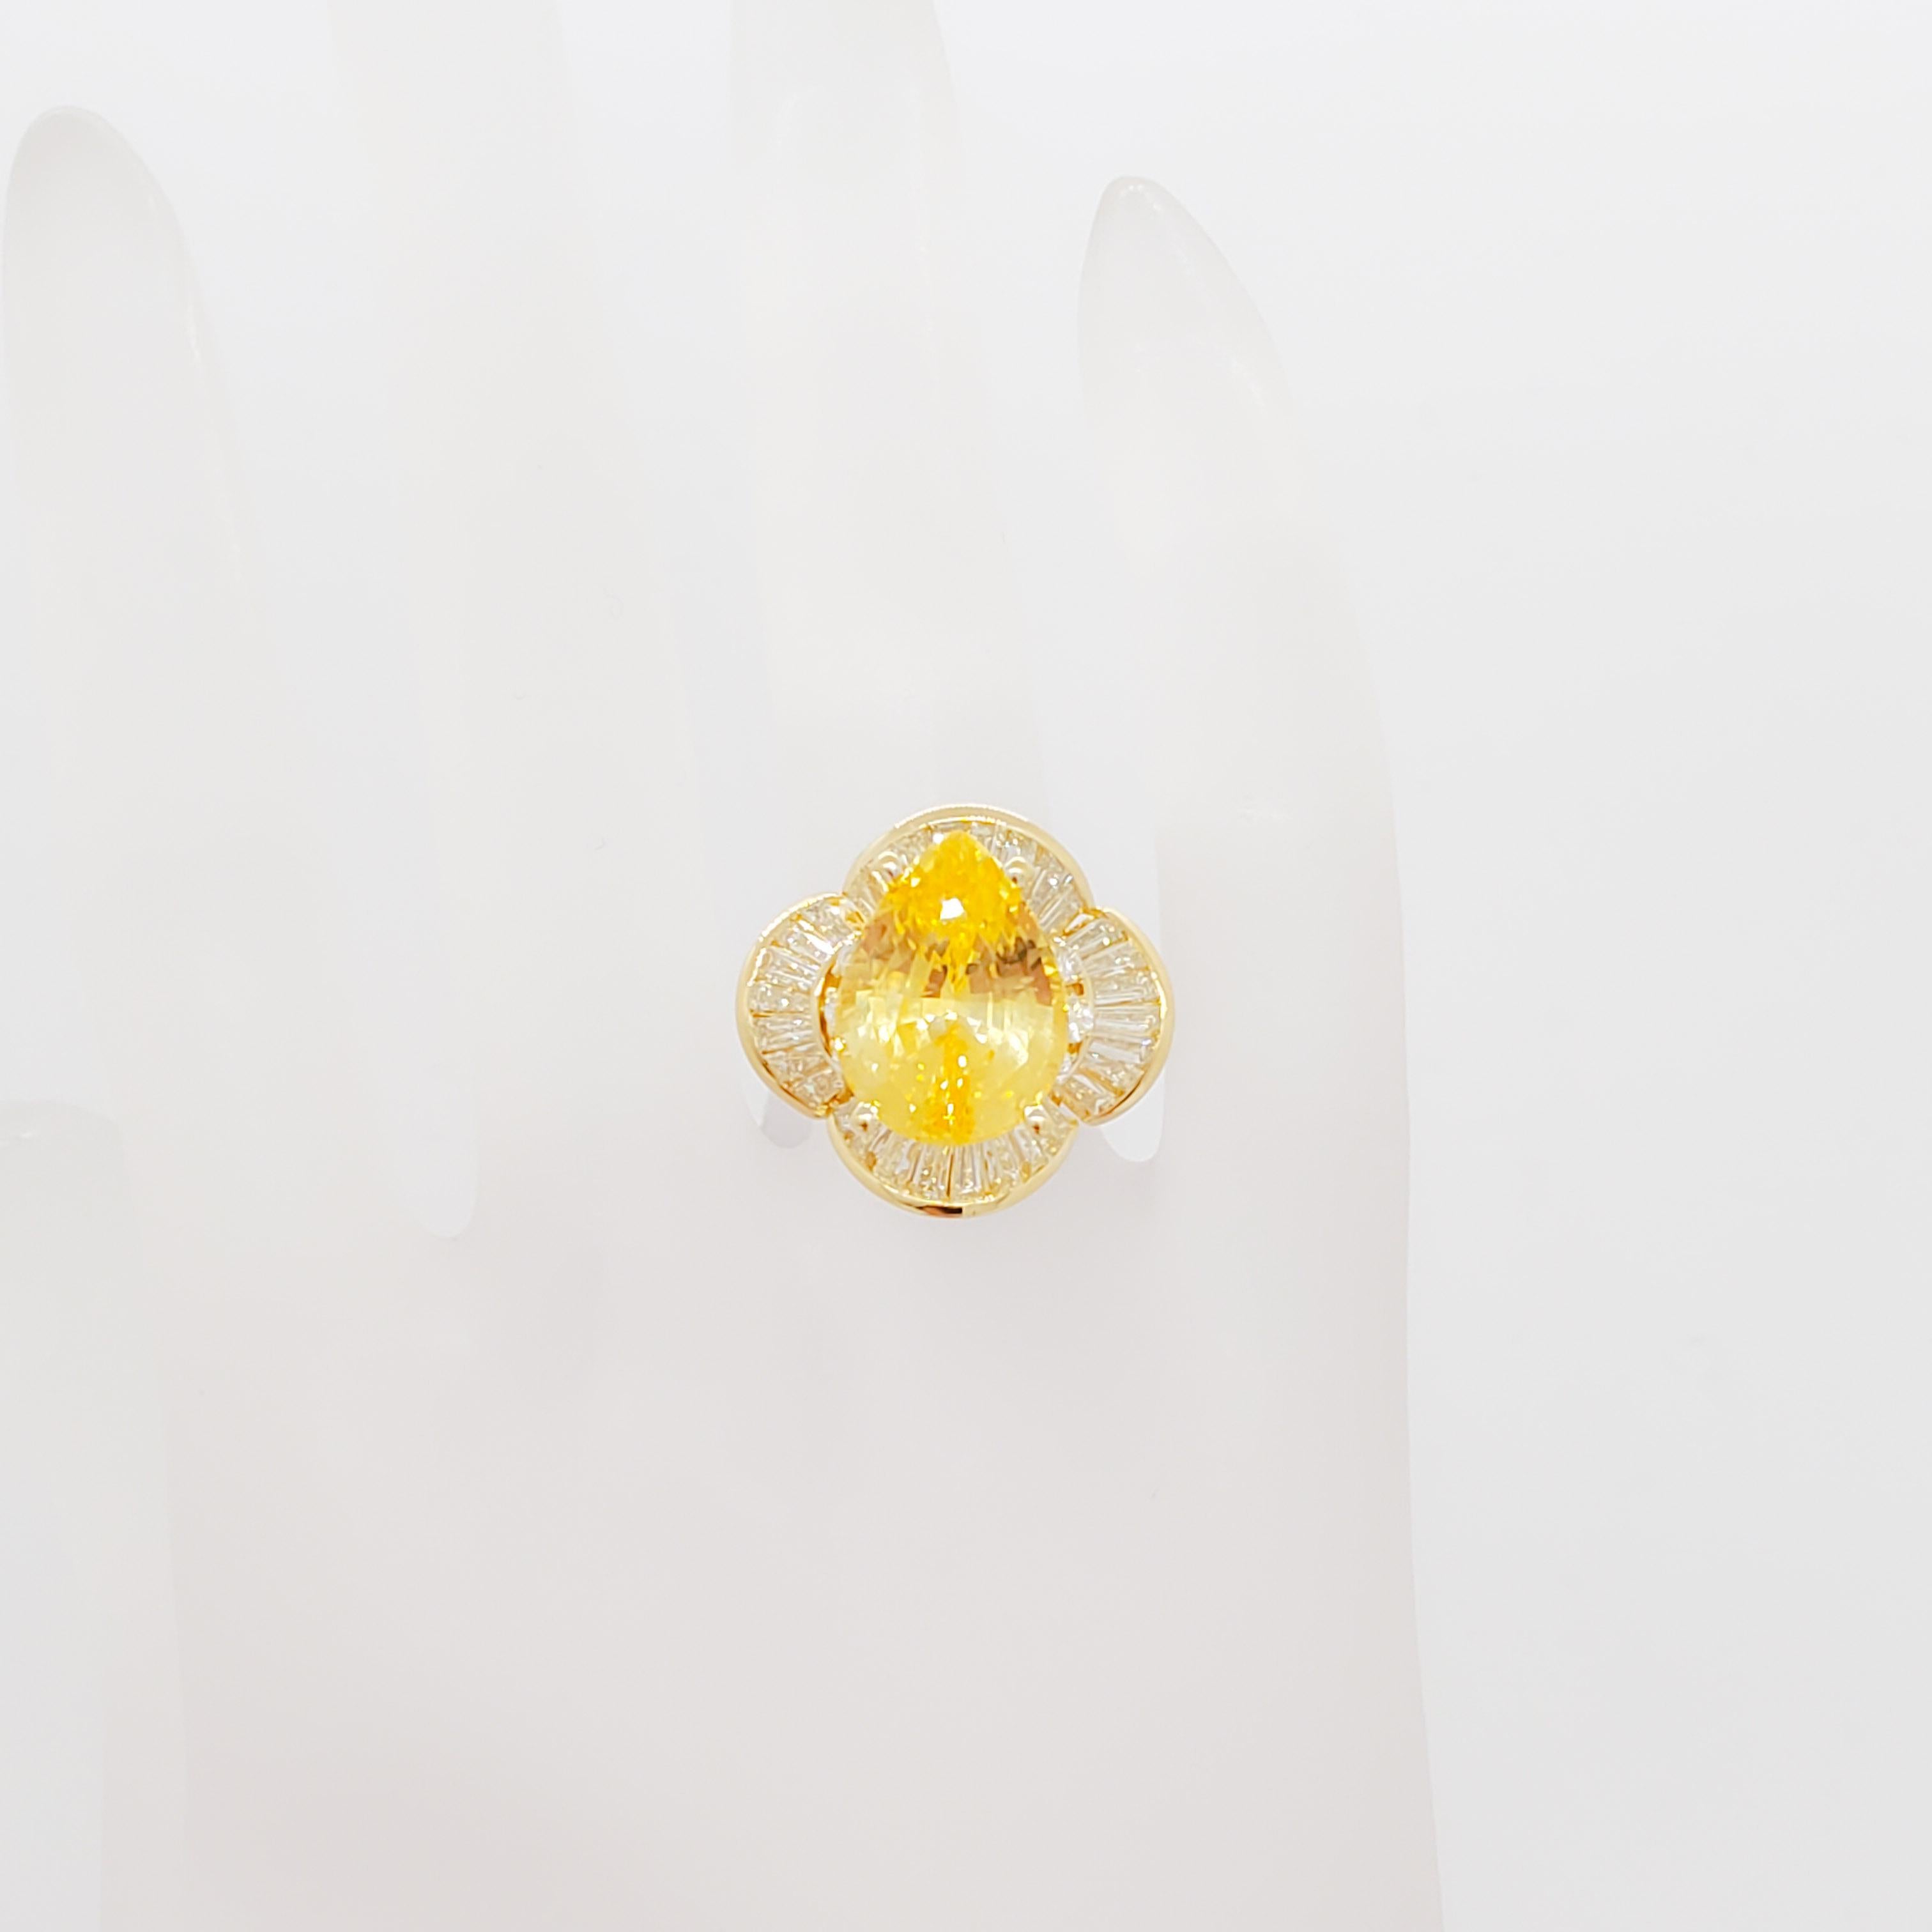 GIA Unheated Sri Lanka Yellow Sapphire and Diamond Cocktail Ring in 18k 1